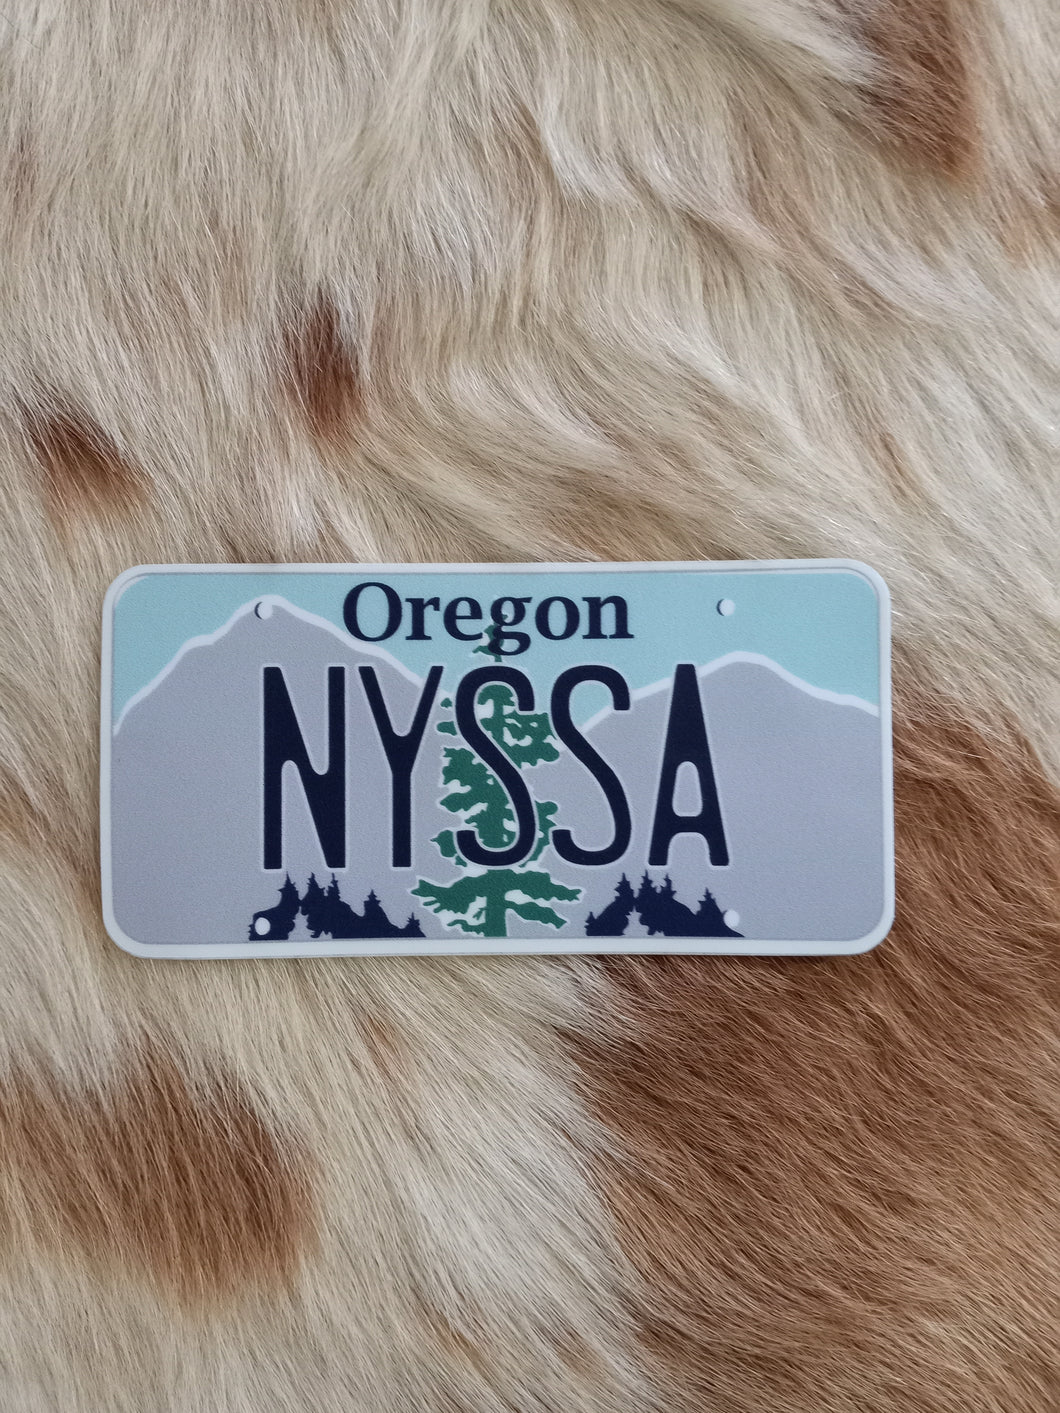 Nyssa, Oregon Licence Plate Decal Sticker